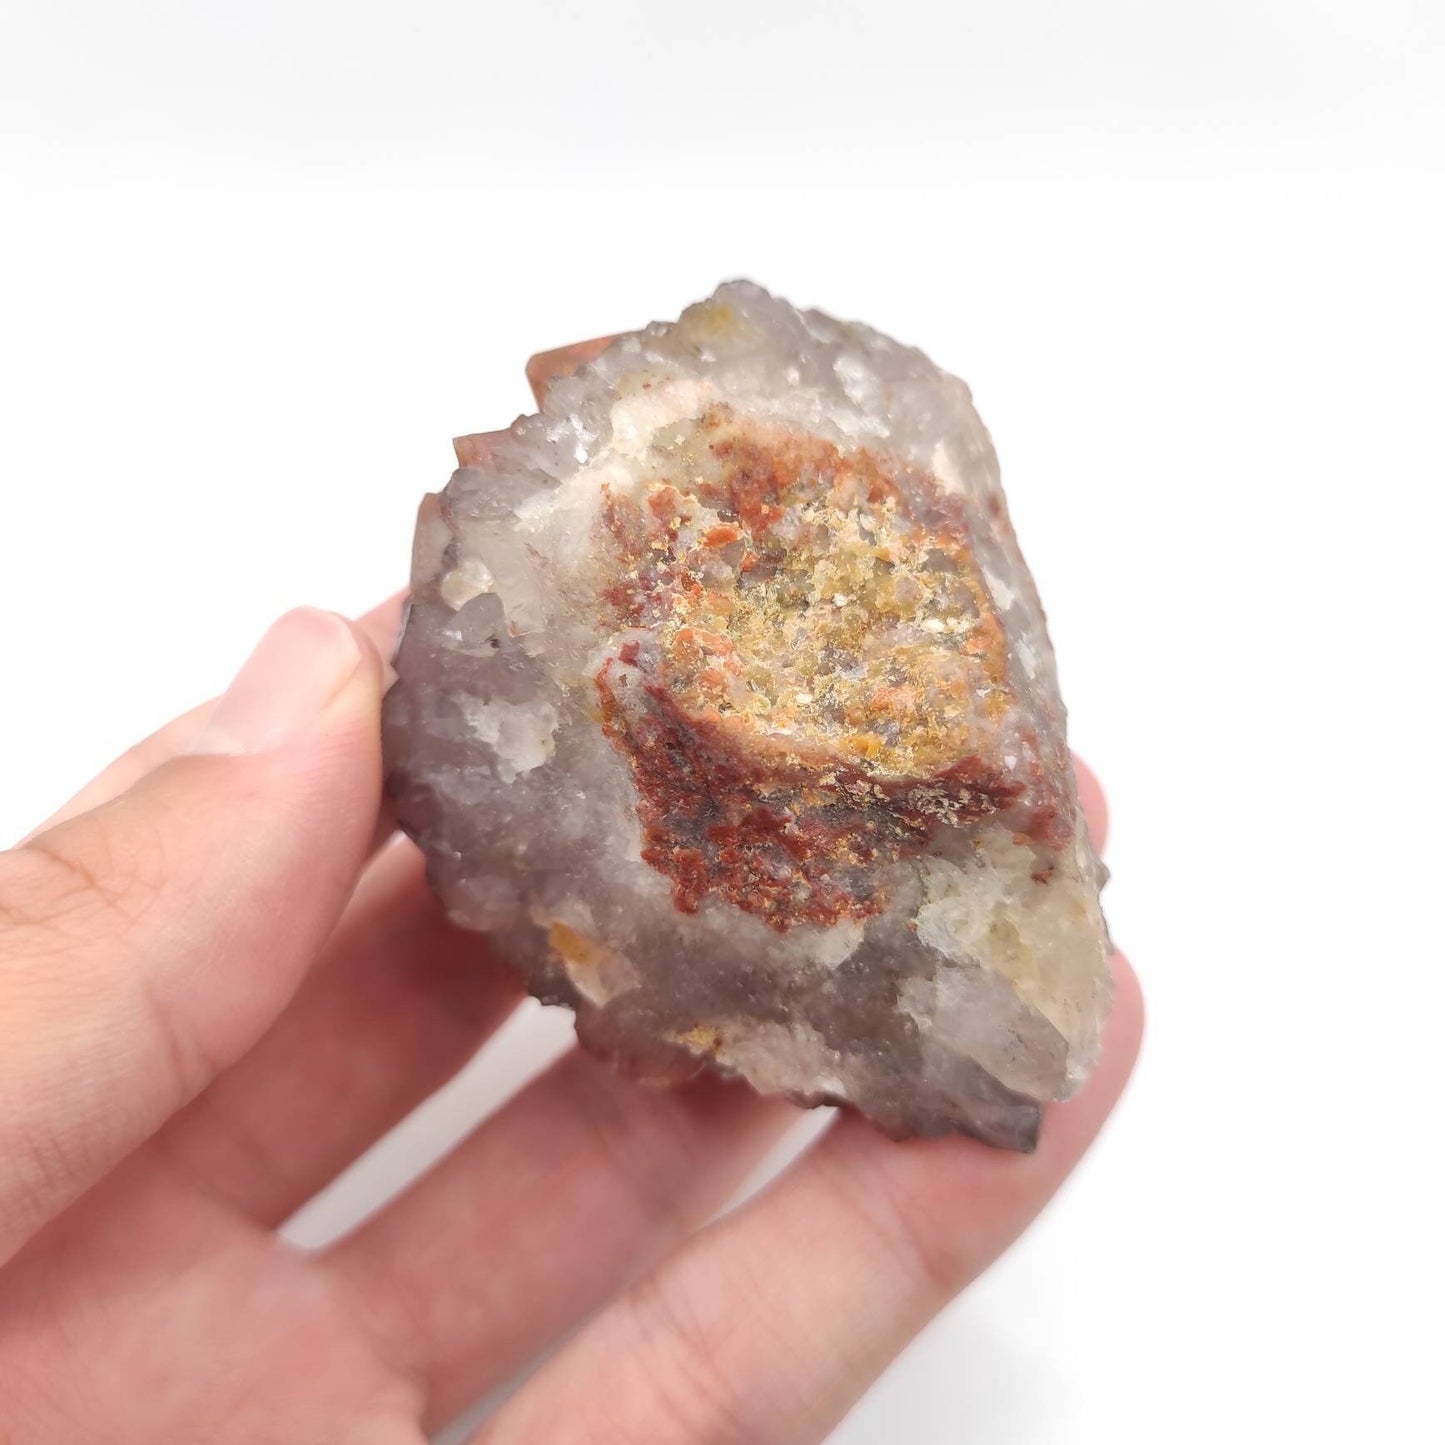 157g Hematite Quartz from Tinjdad, Morocco - Natural Red Hematite Quartz Crystal - Hematite Crystals - Raw Quartz Cluster - Rough Minerals